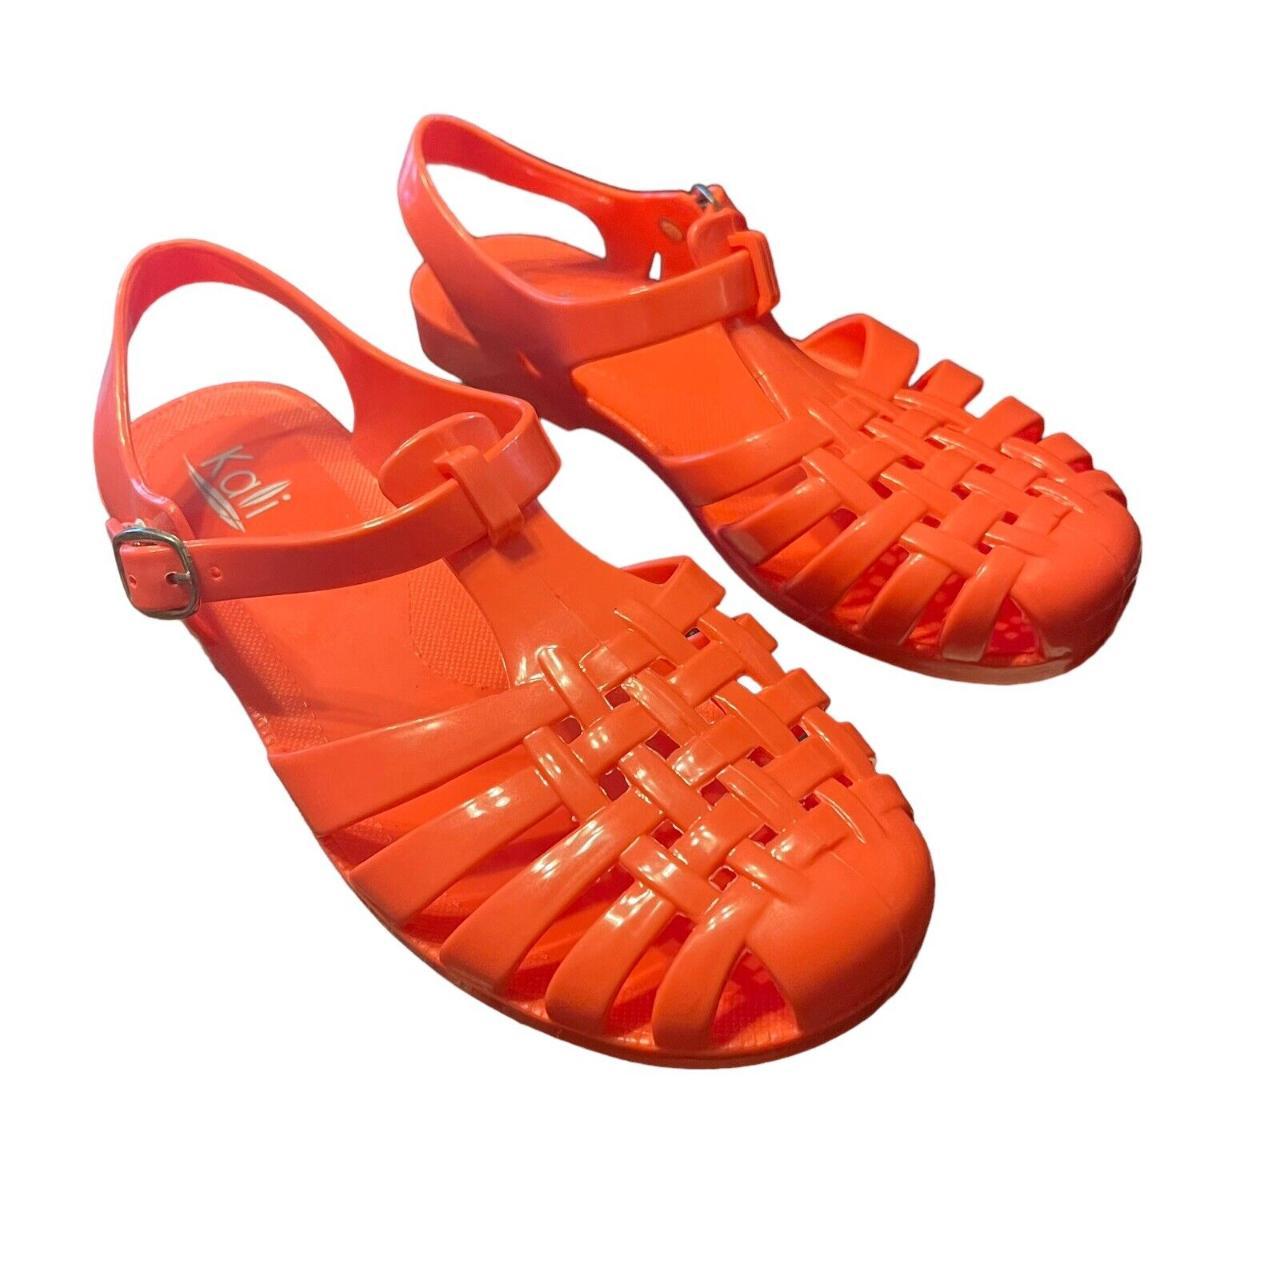 KALI Angel Low Peach Jelly Flat Sandals Girls Size 2... - Depop